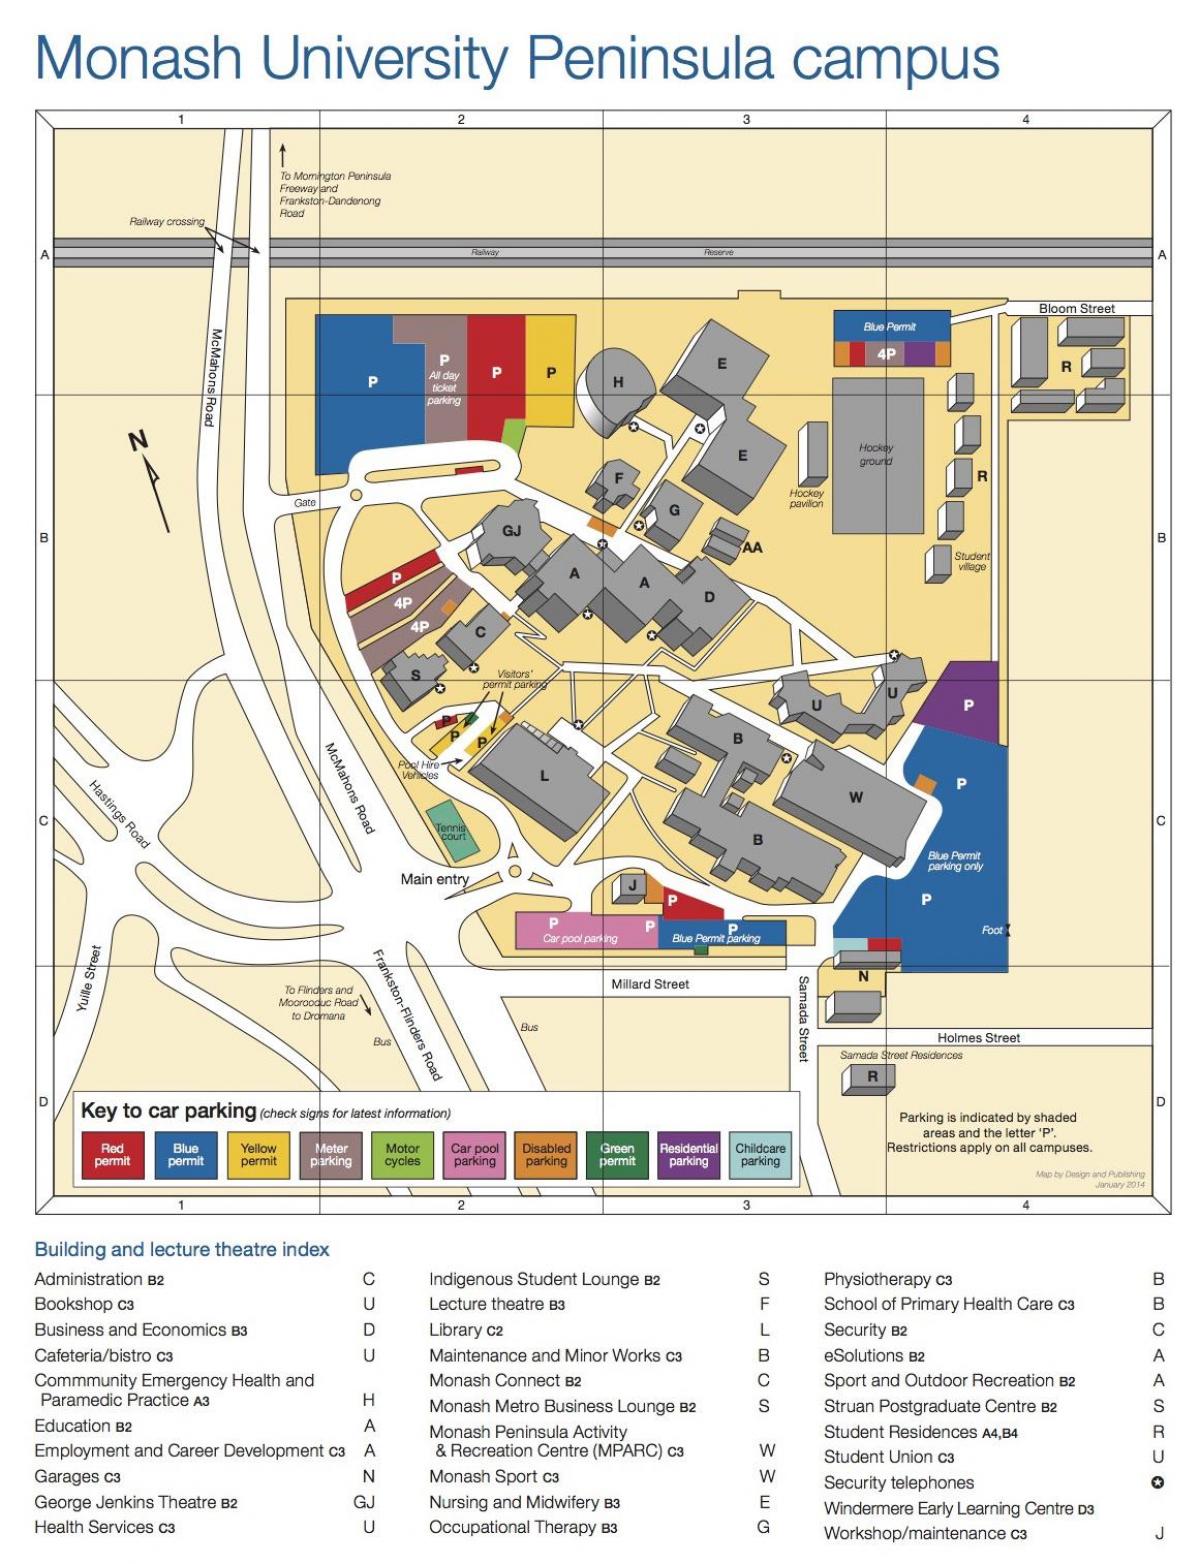 Монаш карту кампуса університету